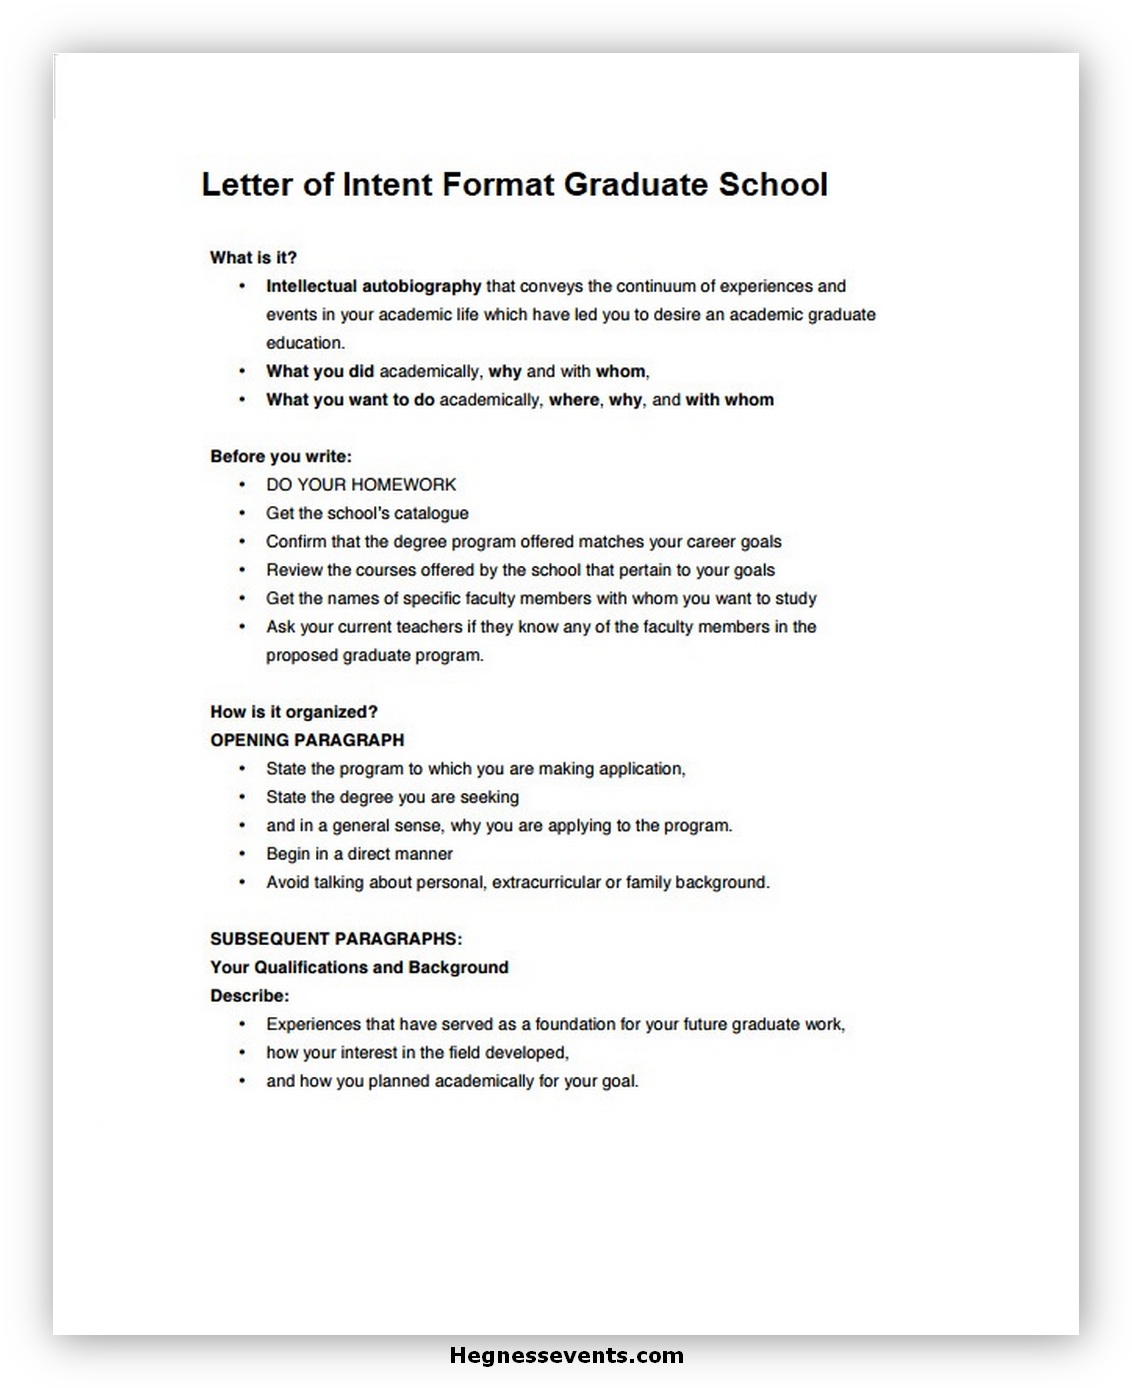 Letters of Intent Graduate School 02